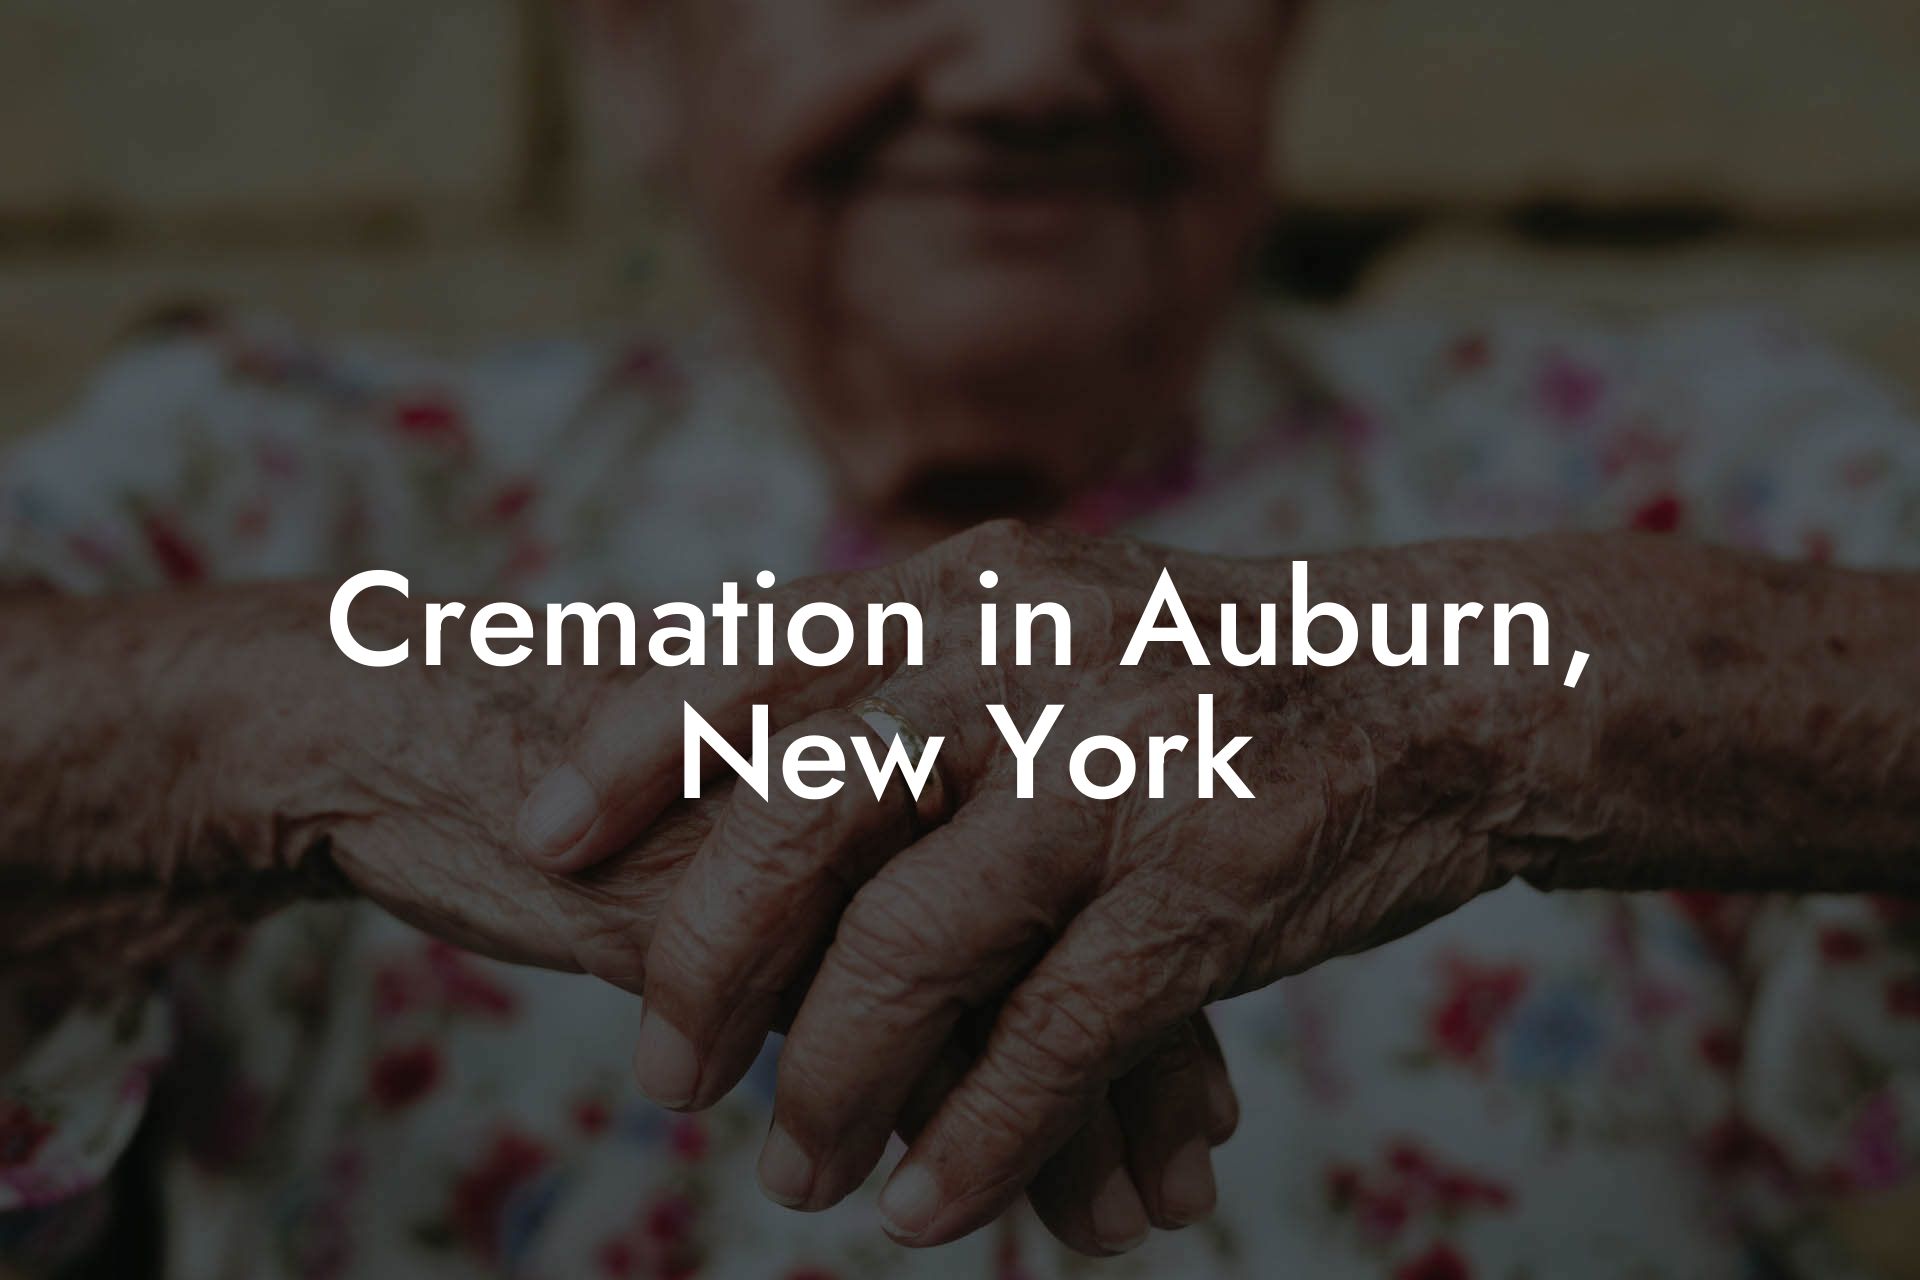 Cremation in Auburn, New York